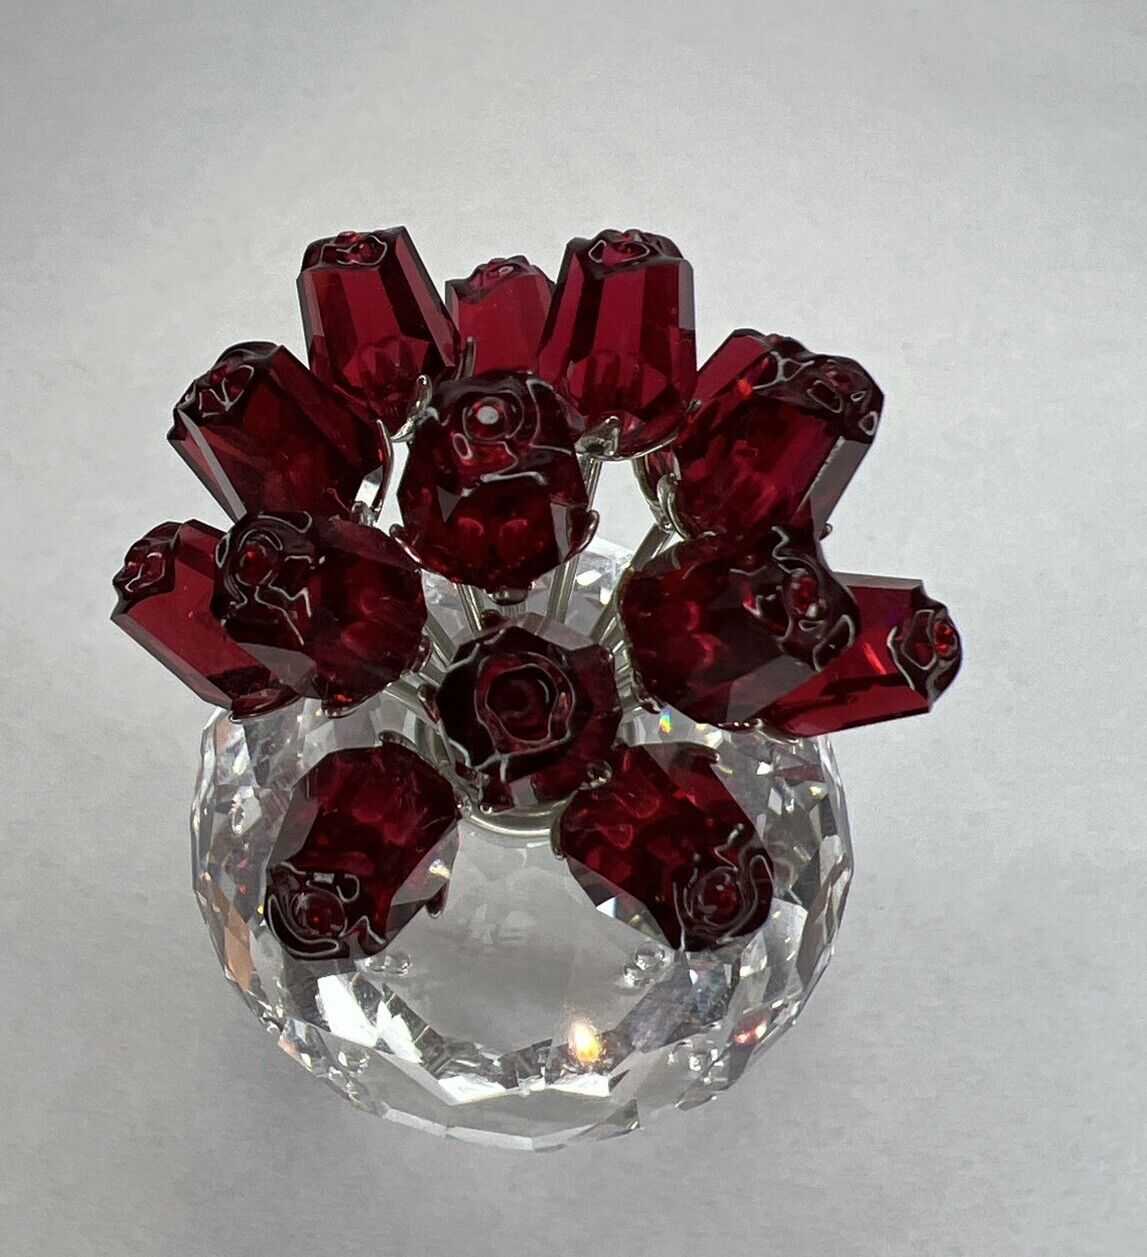 Swarovski Crystal 2002 SCS 15th Anniversary Special Ed. Vase of 15 Red Roses